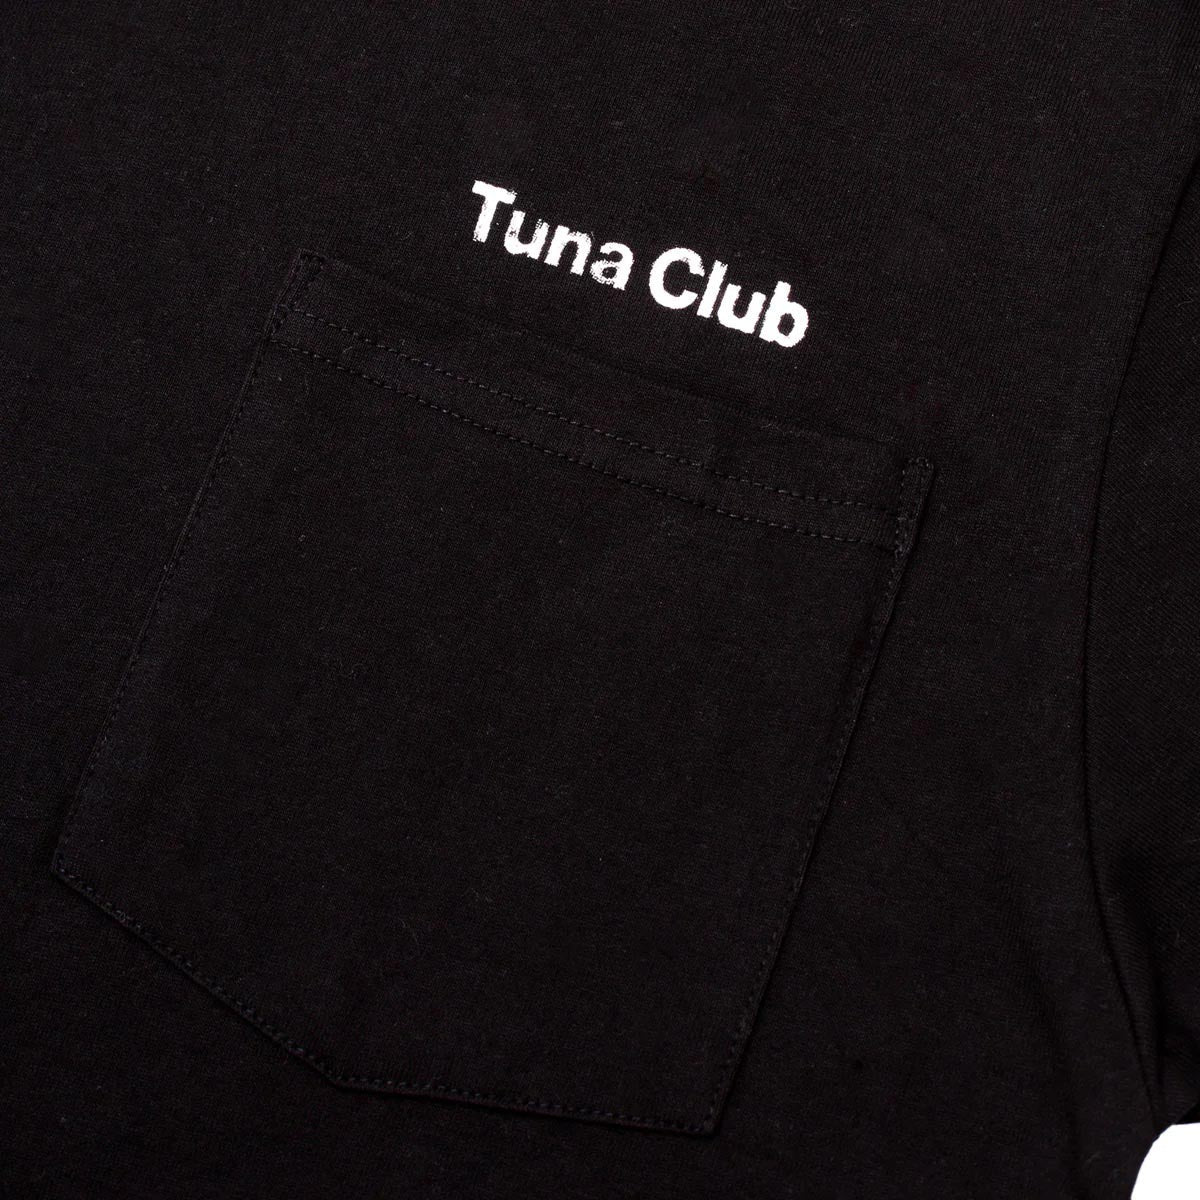 Hoddle Tuna Club T-Shirt - Black image 4